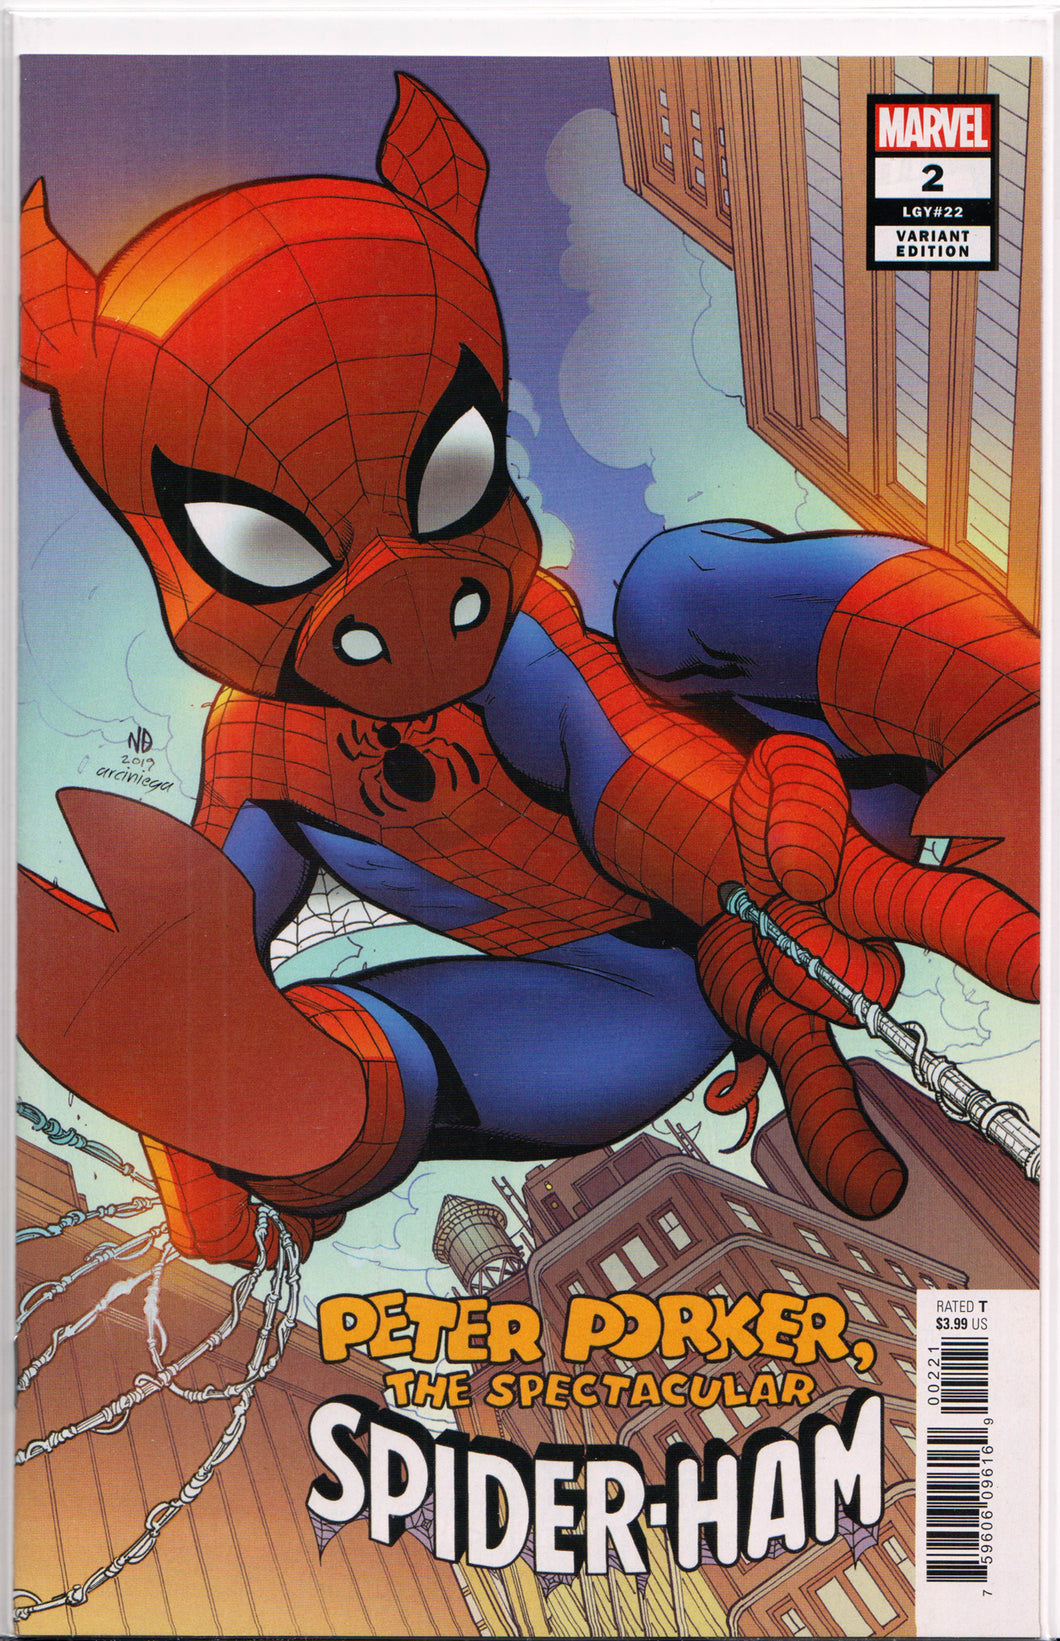 PETER PORKER: THE SPECTACULAR SPIDER-HAM #2 COMIC BOOK ~ Marvel Comics